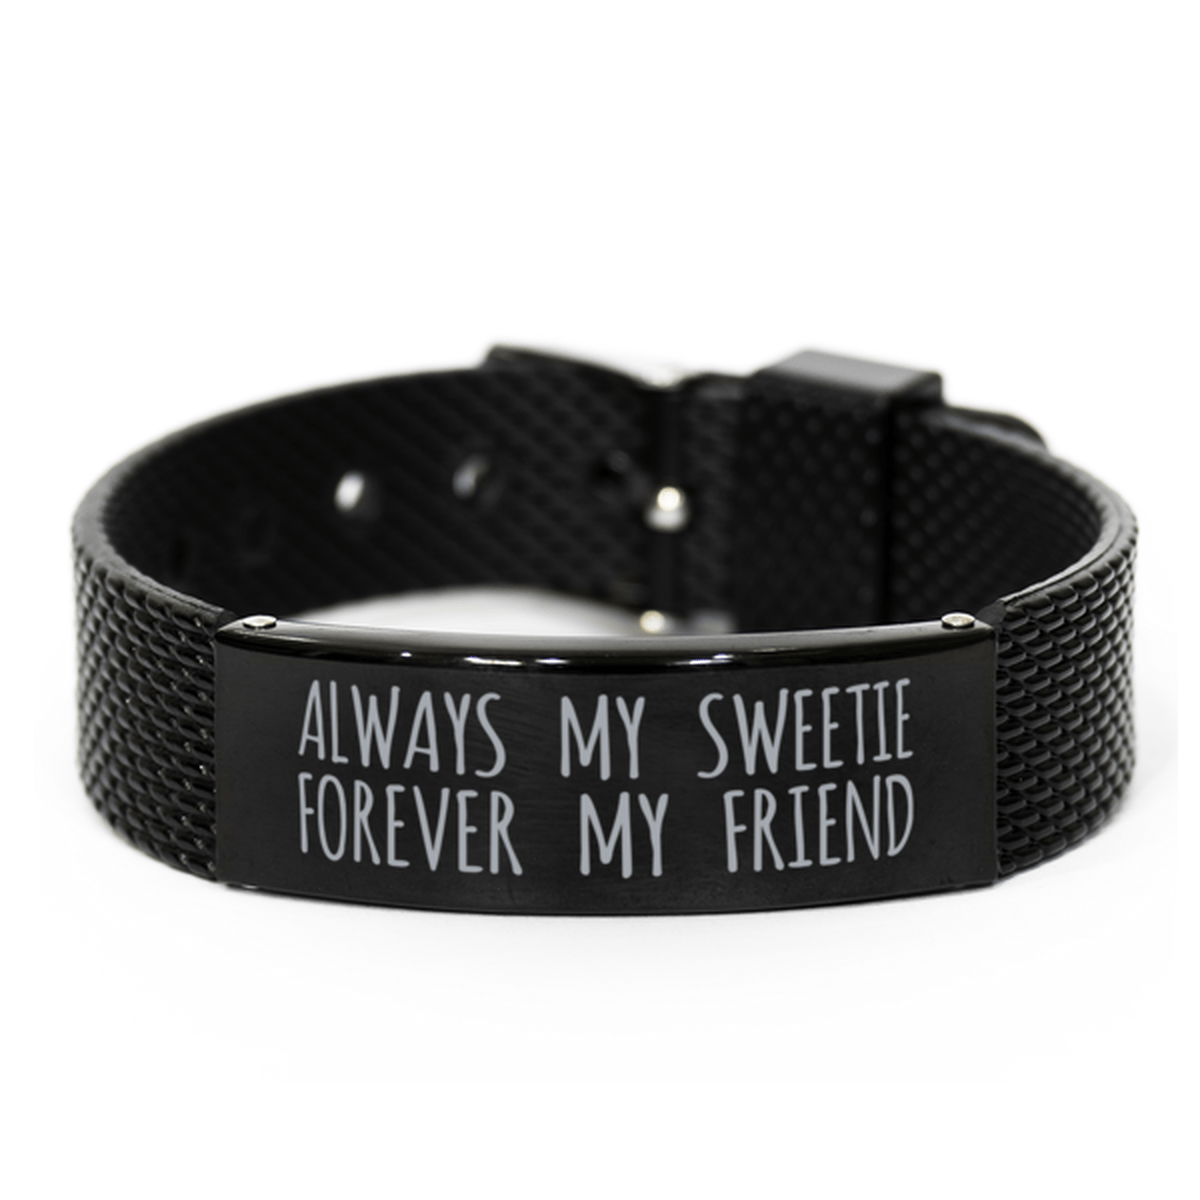 Inspirational Sweetie Black Shark Mesh Bracelet, Always My Sweetie Forever My Friend, Best Birthday Gifts for Family Friends